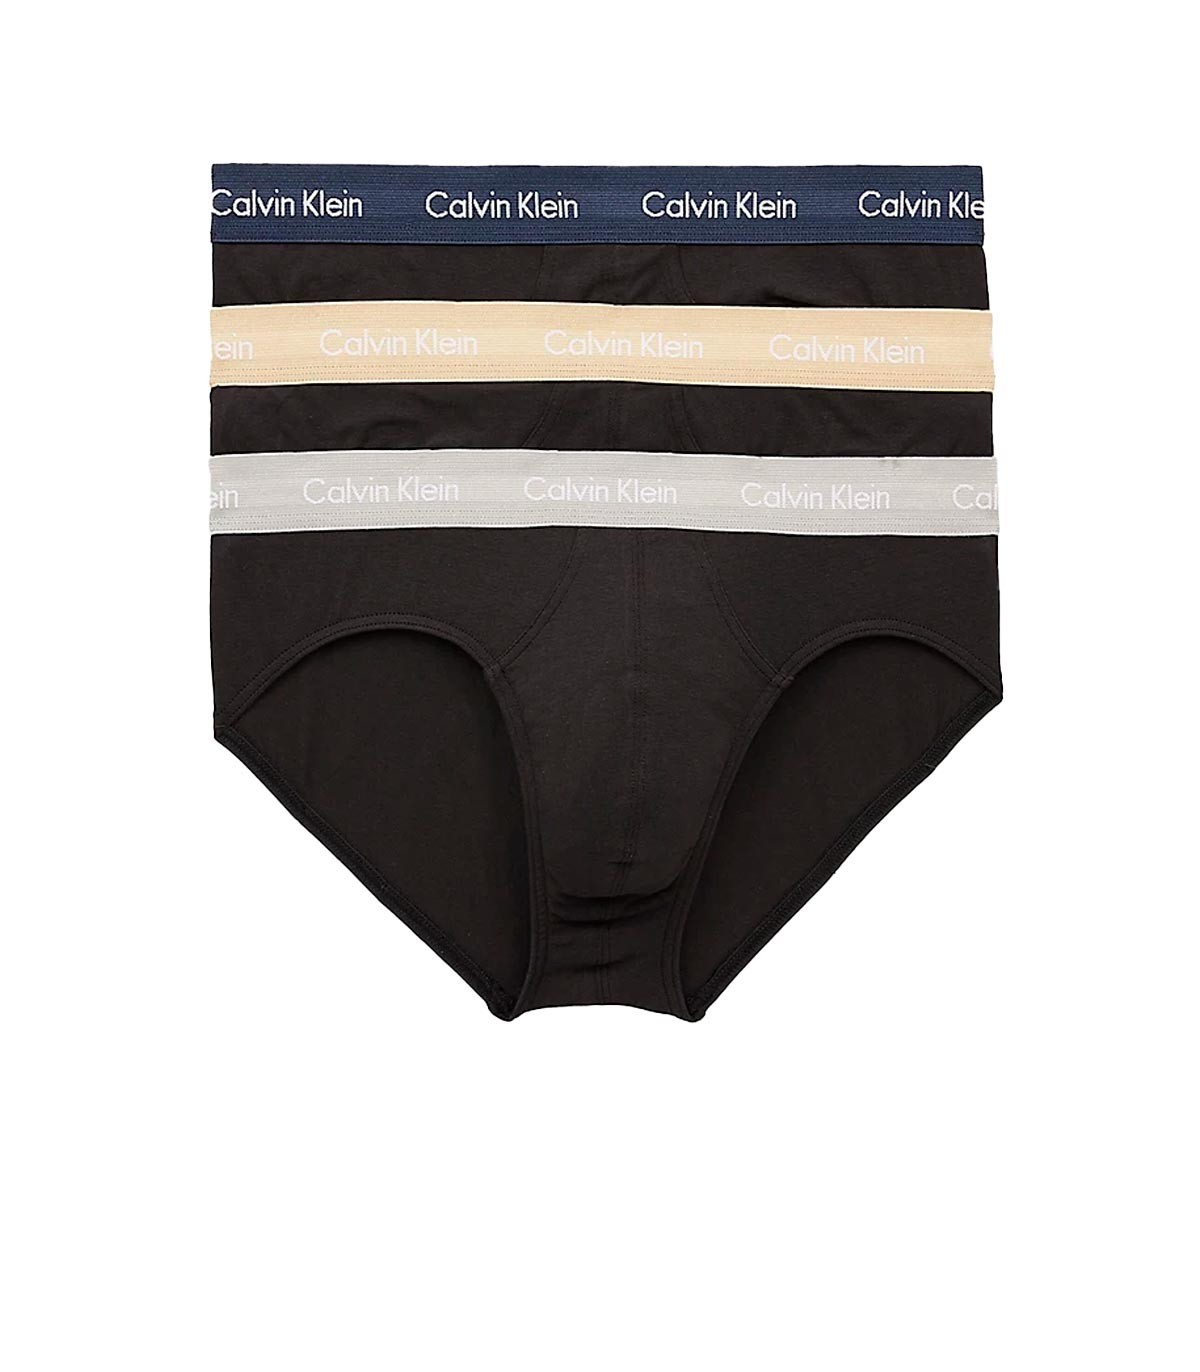 Calvin Klein - Calzoncillos Pack x3 Hip Brief - Negro